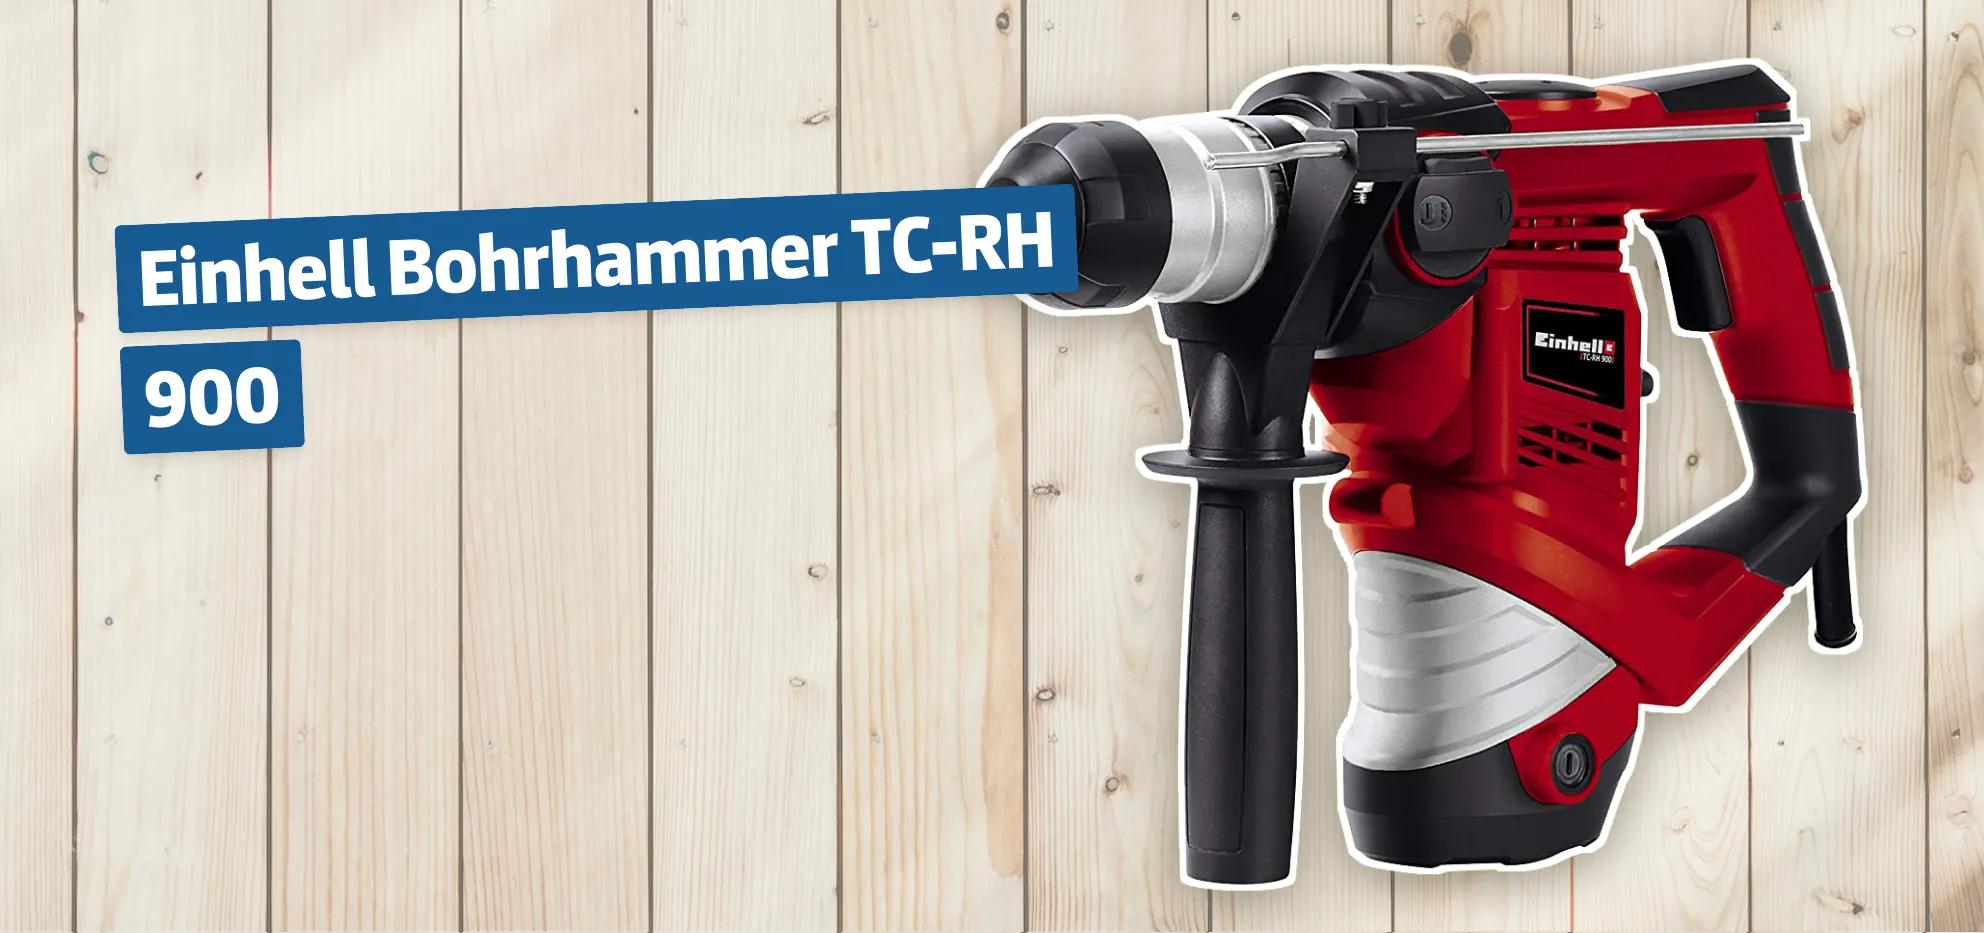 Einhell Bohrhammer TC-RH 900